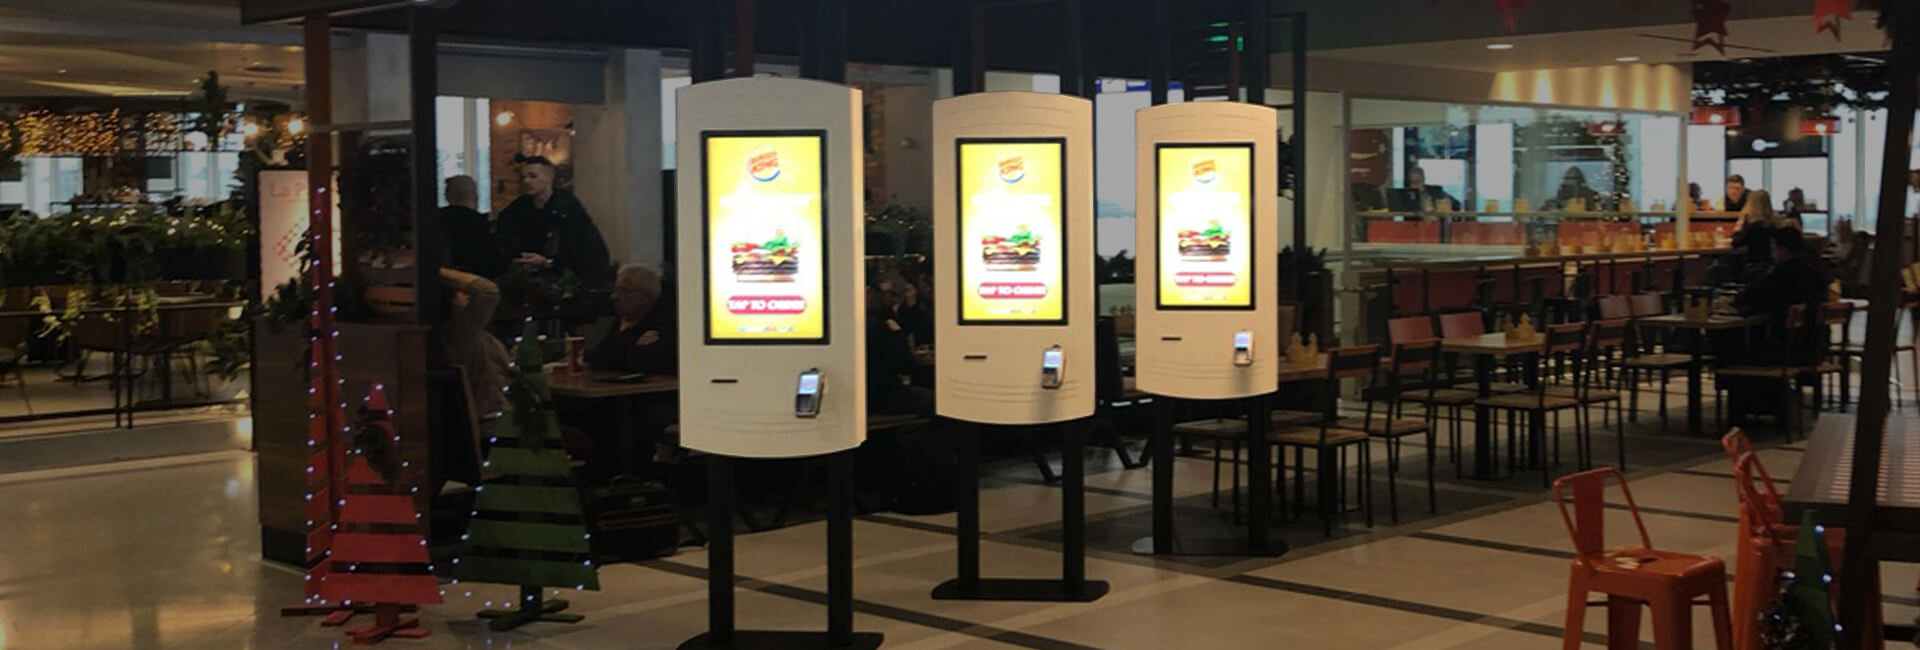 Self-service Kiosks for Restaurants (QSR)